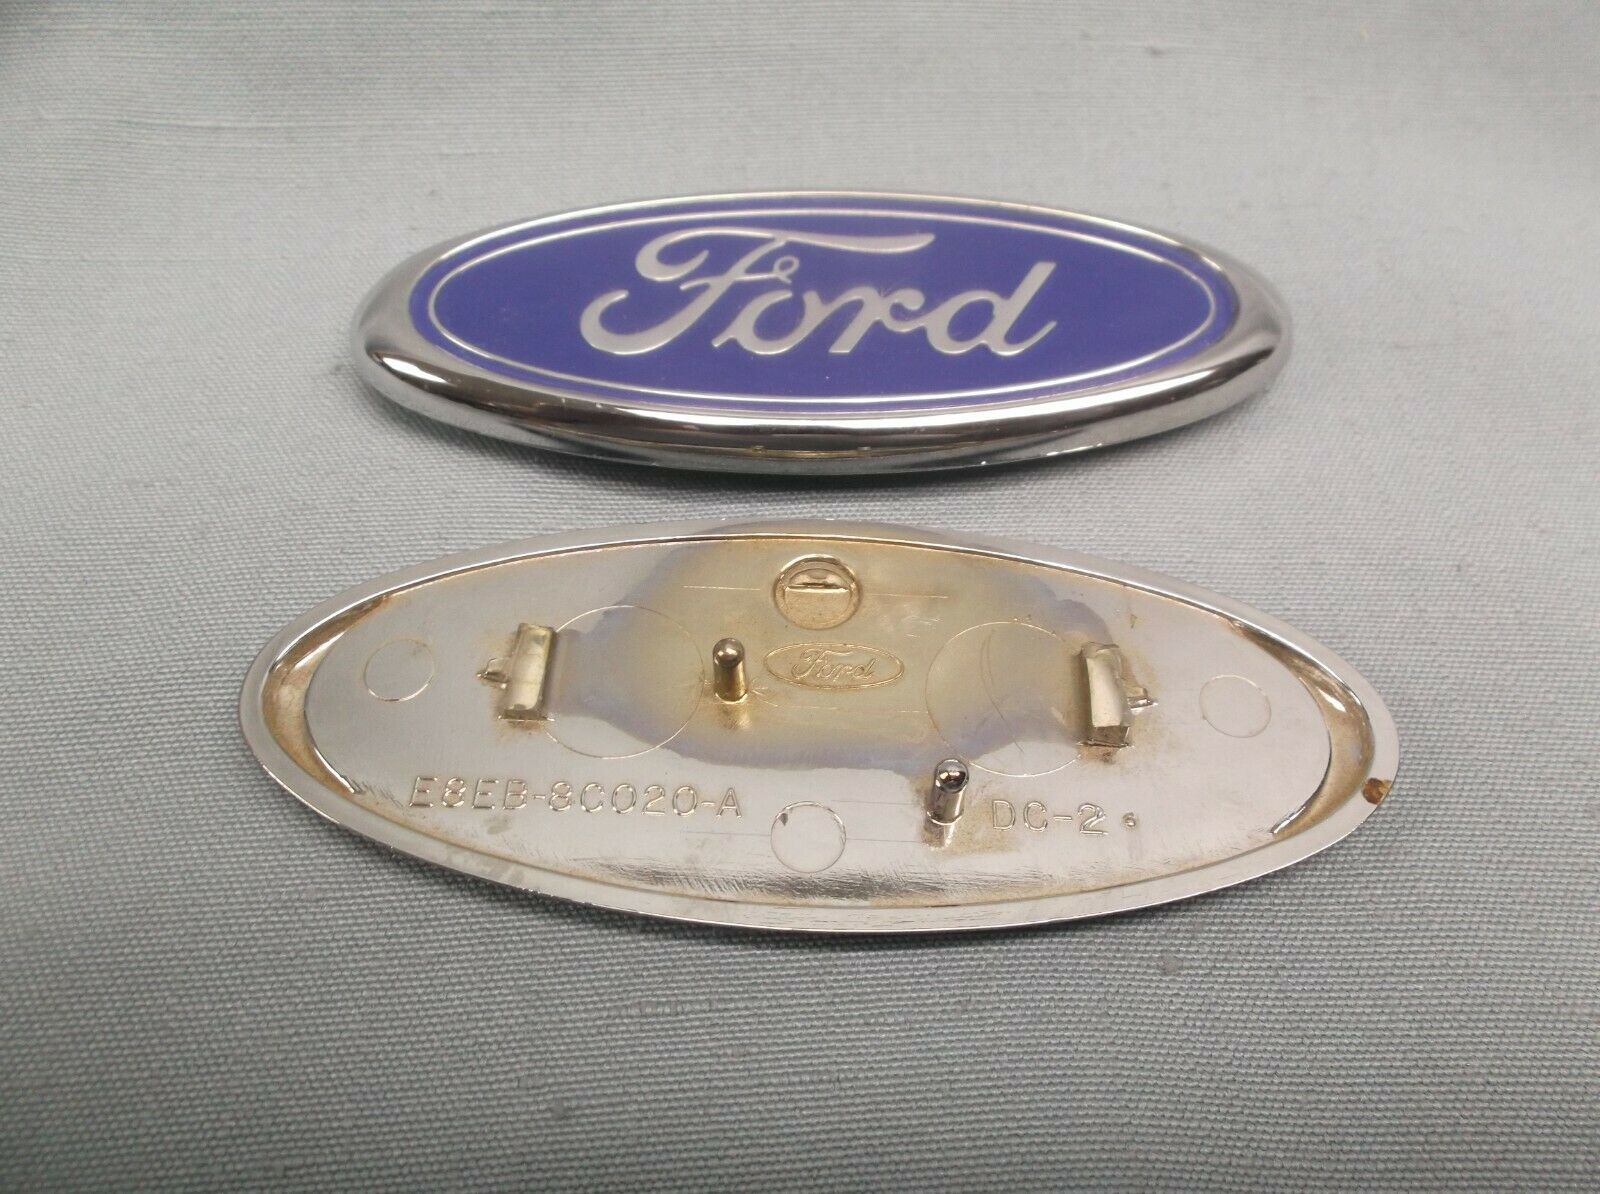 O.e.m. Ford E8eb-80020-a Emblem Oval Blue Silver 1 1/2" X 4"  Size Imperfections